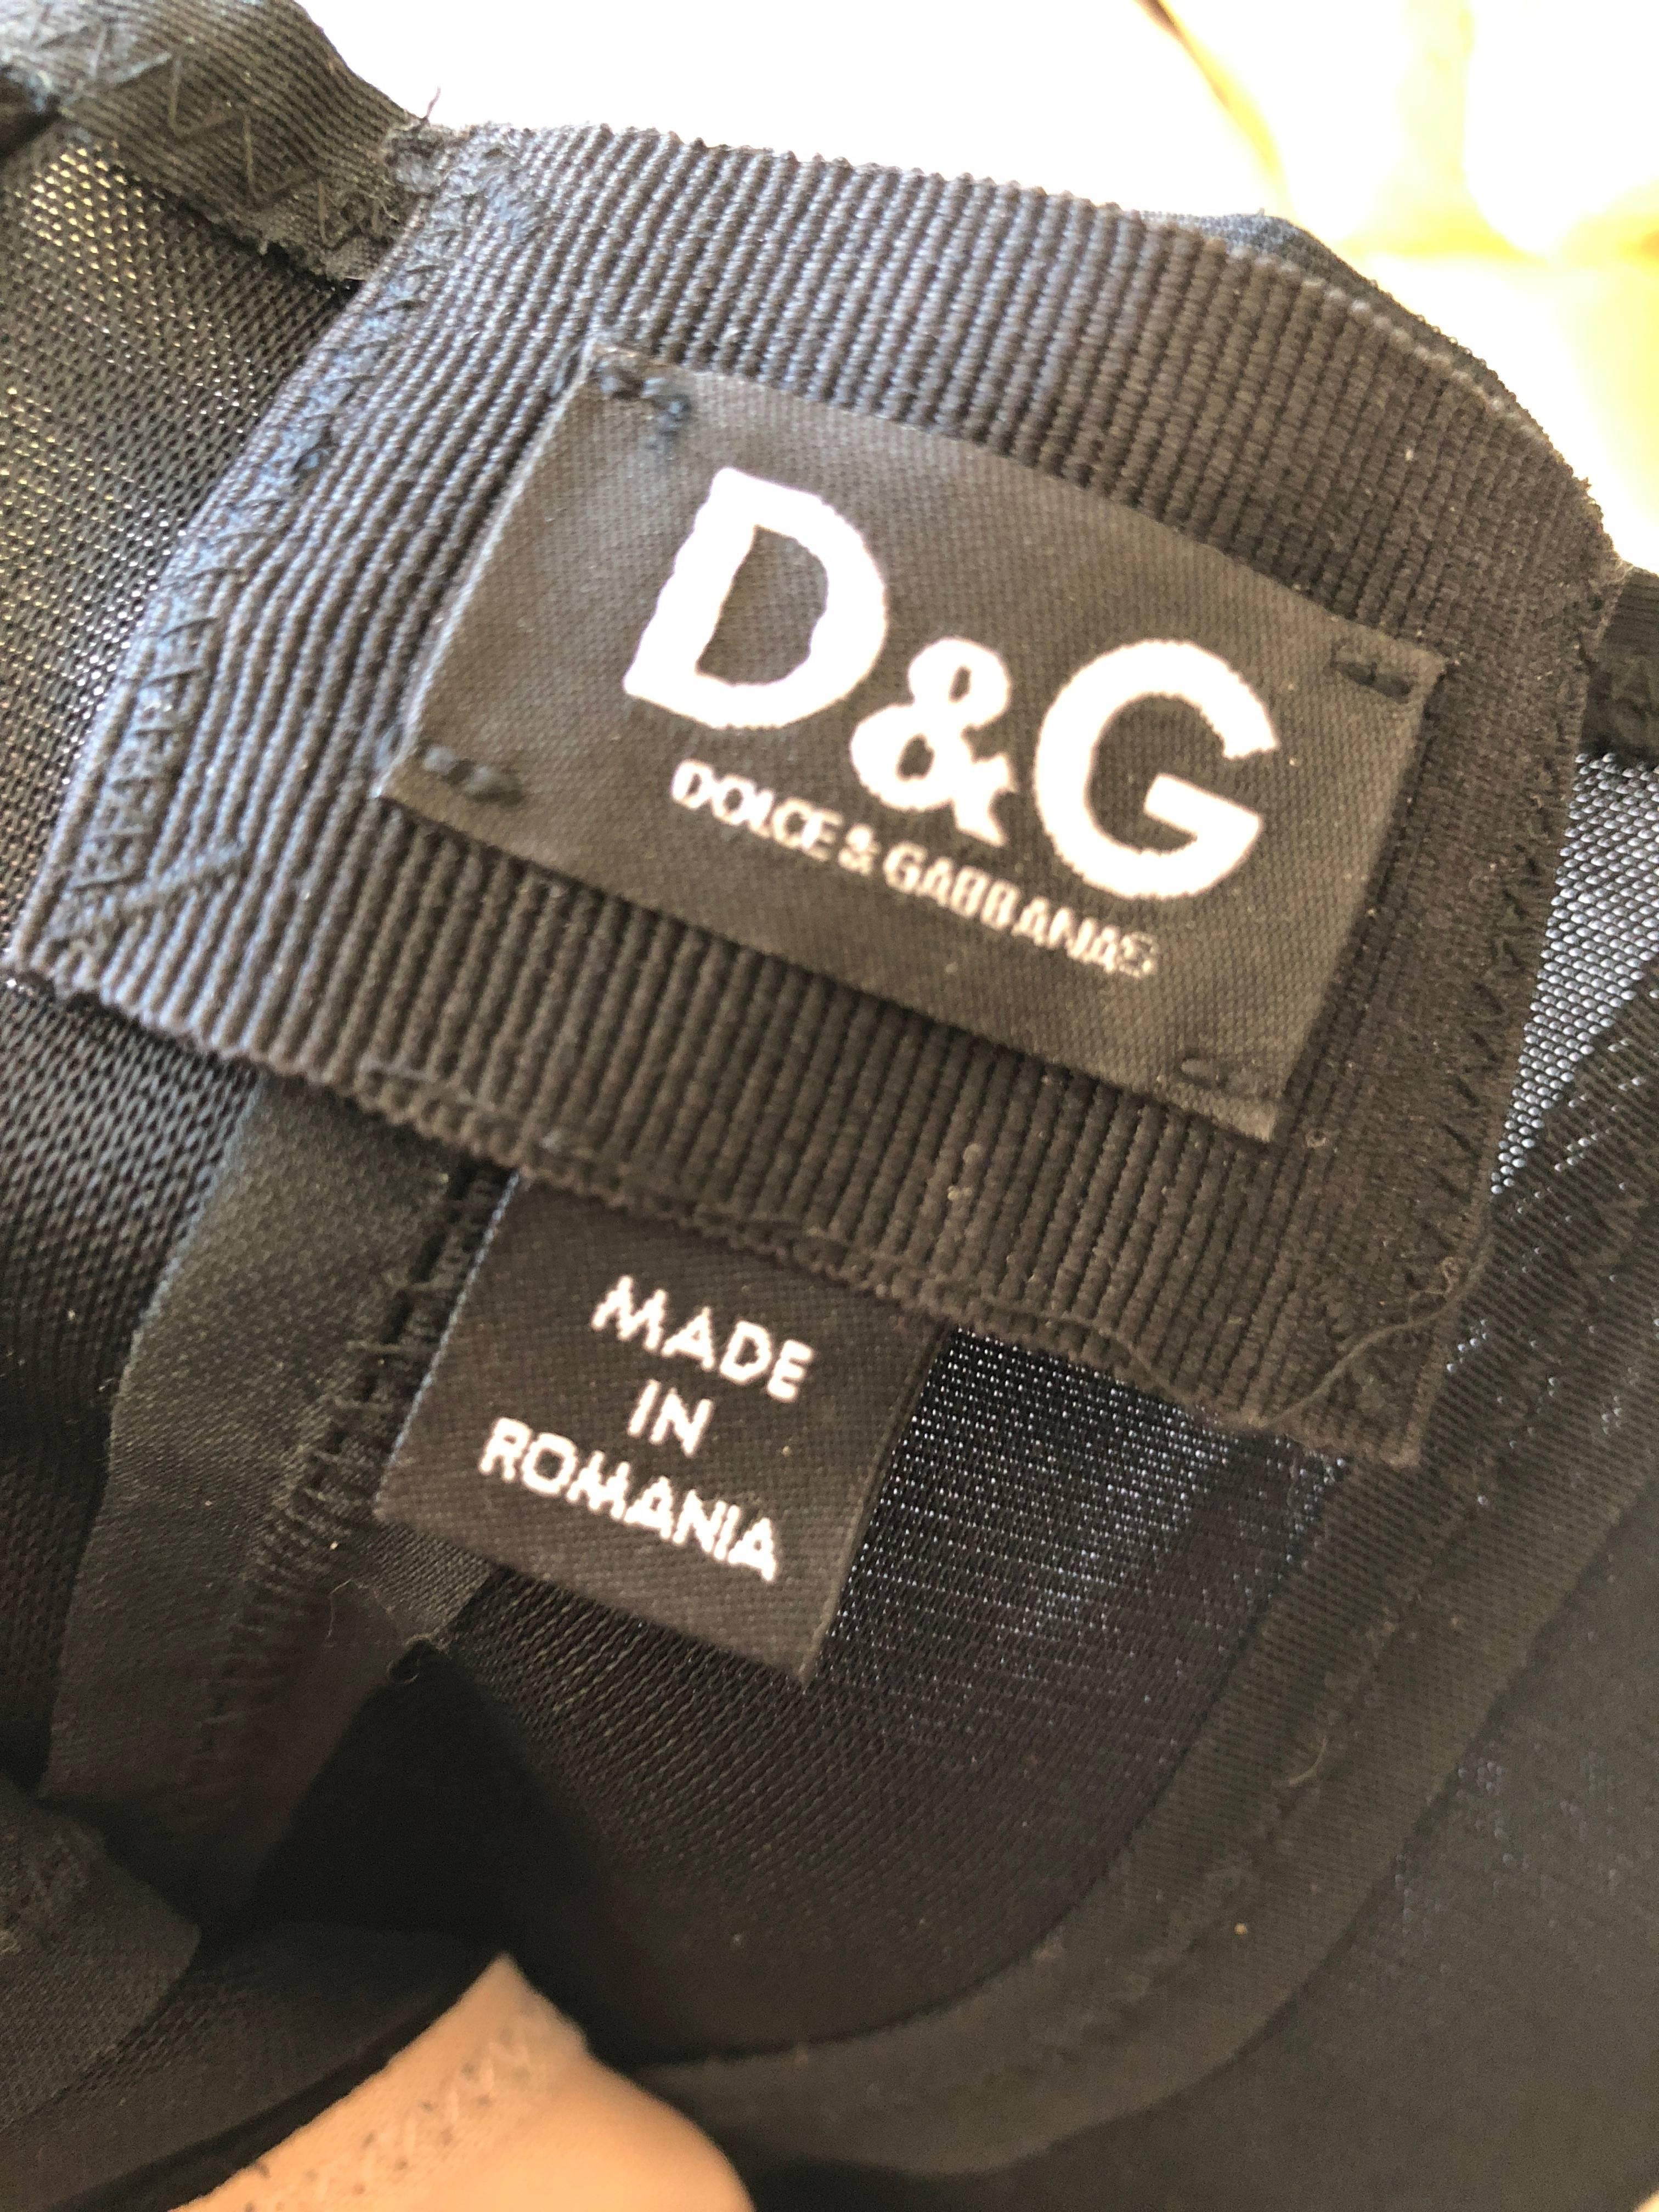   D&G by Dolce & Gabbana Super Sexy Black Net Vintage Strapless Cocktail Dress For Sale 2